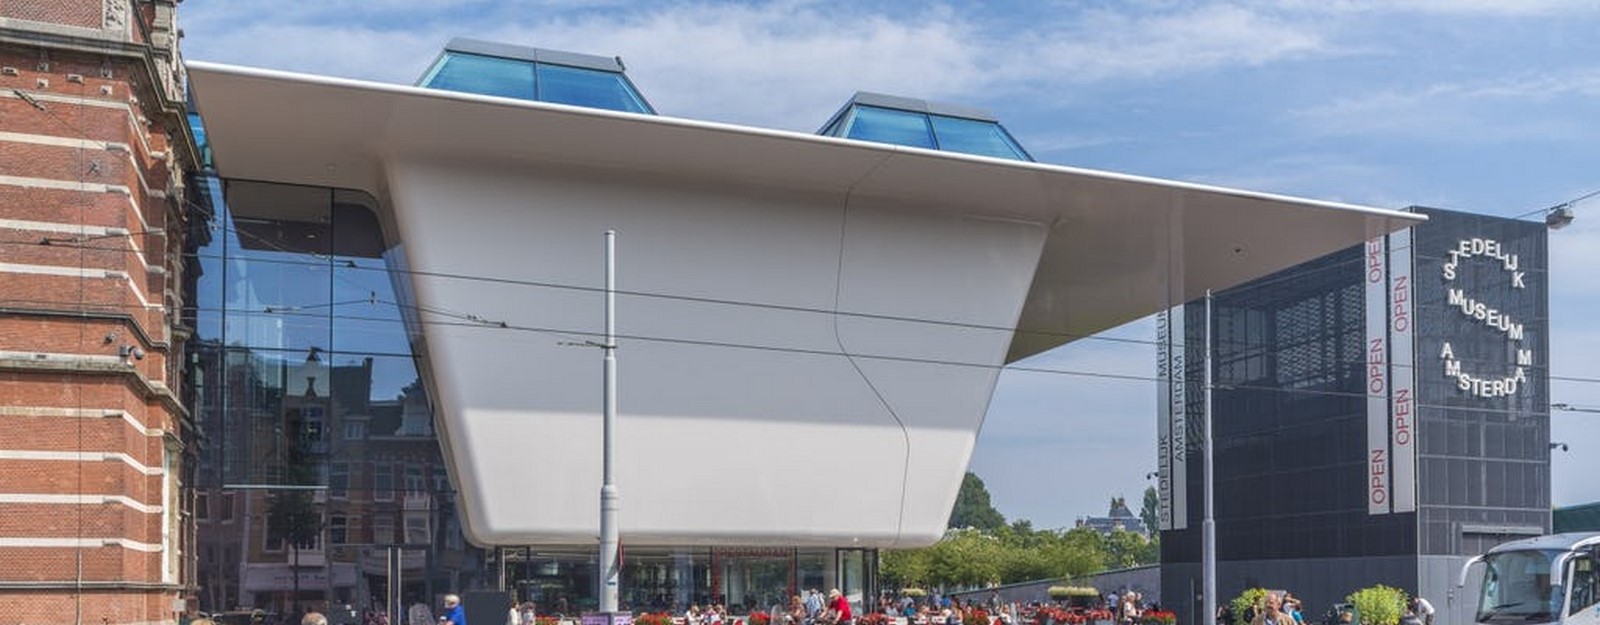 Stedelijk Museum by Benthem Crouwel Architects - Sheet1